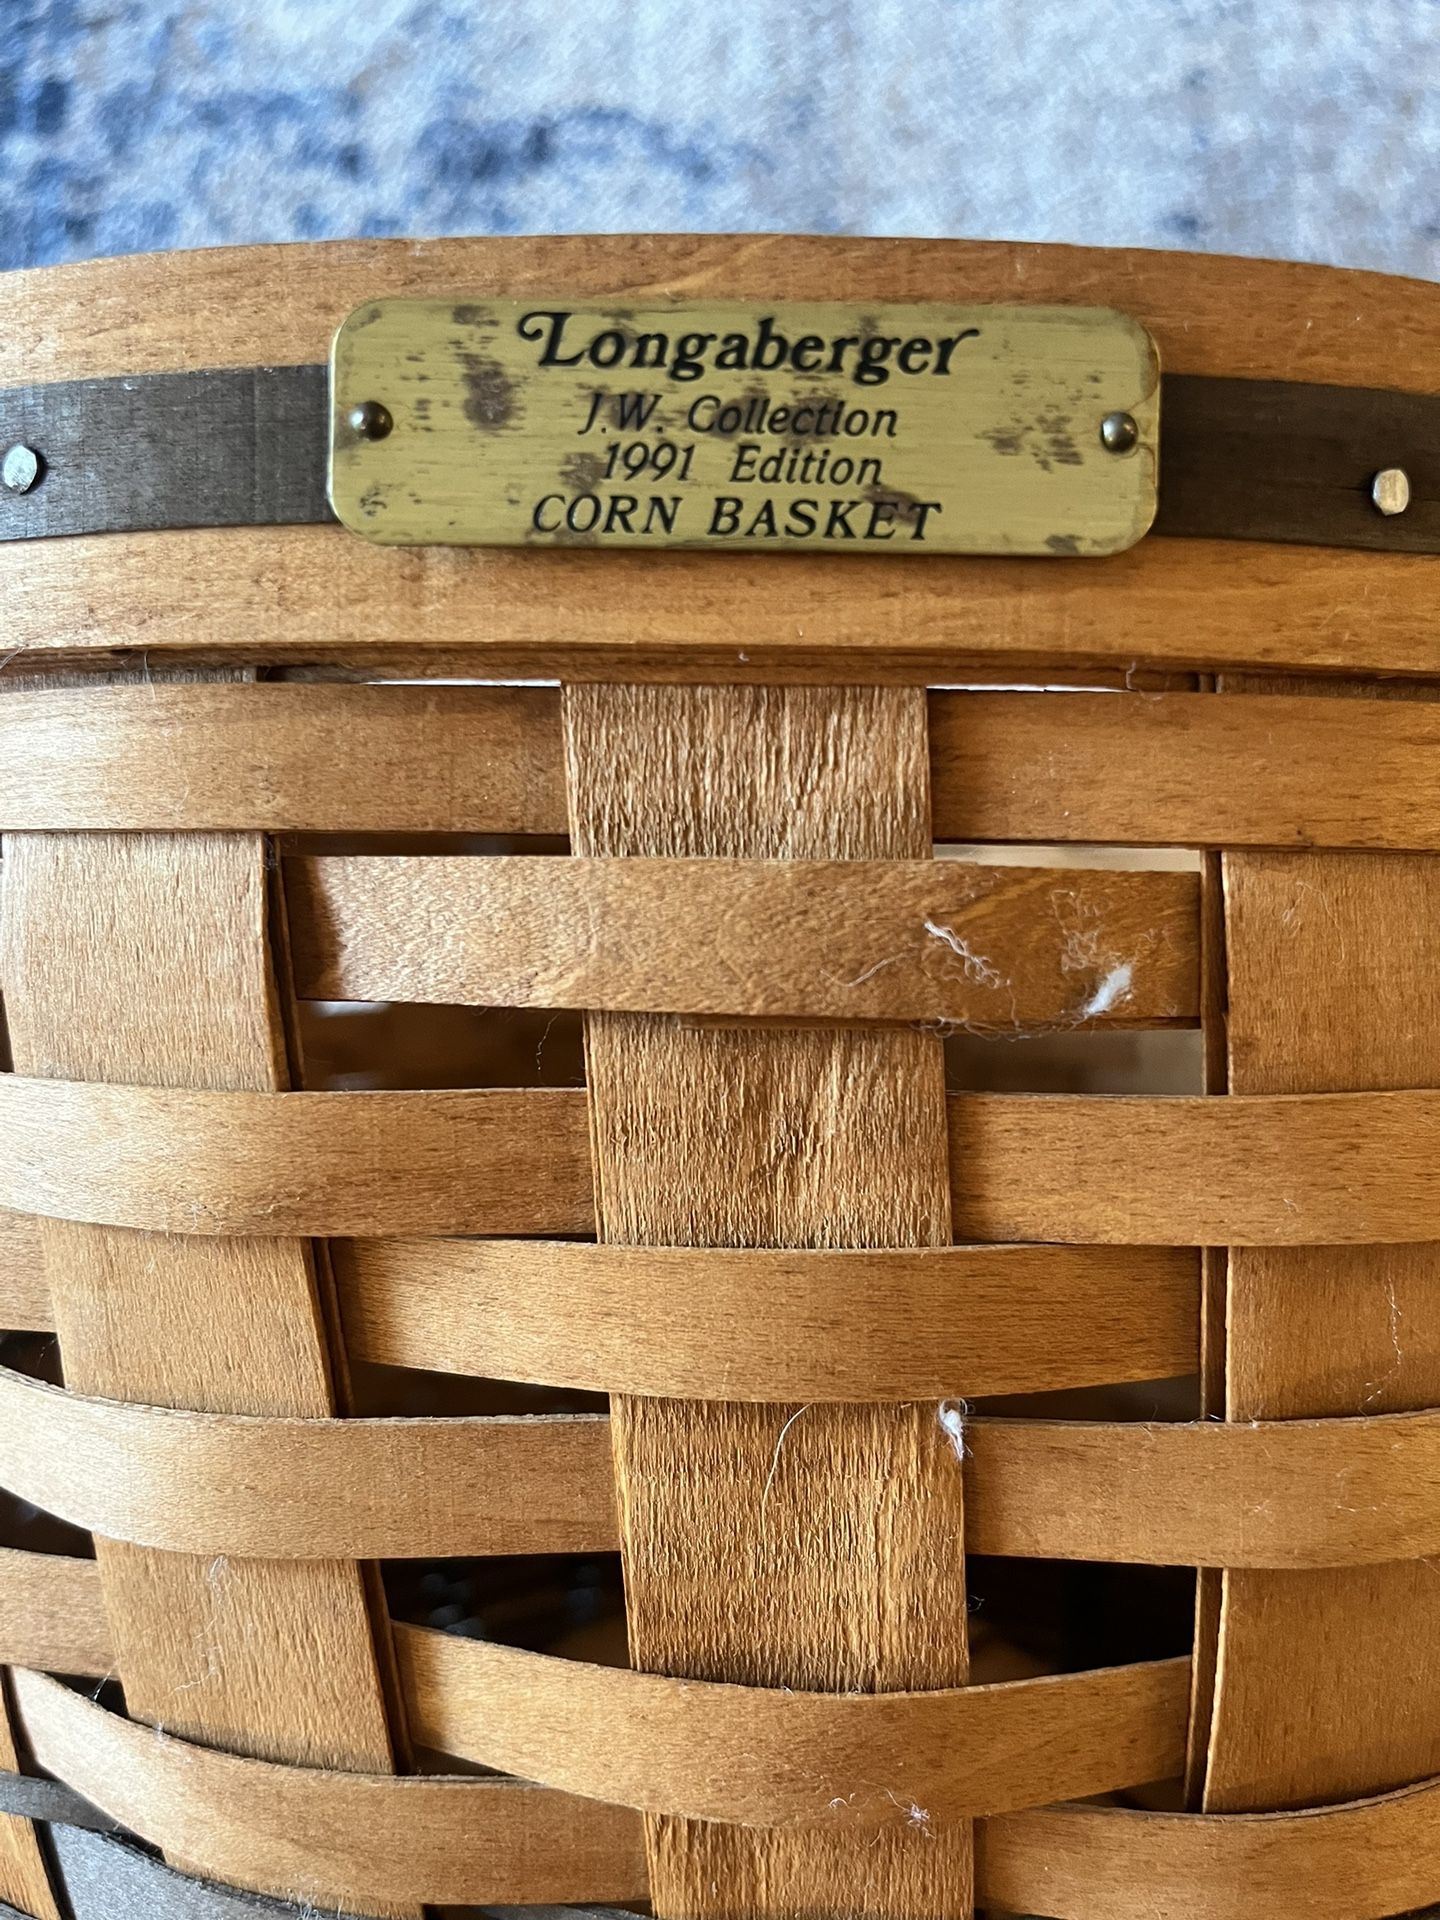 Longaberger Corn Basket J.W Collection 1991 Edition